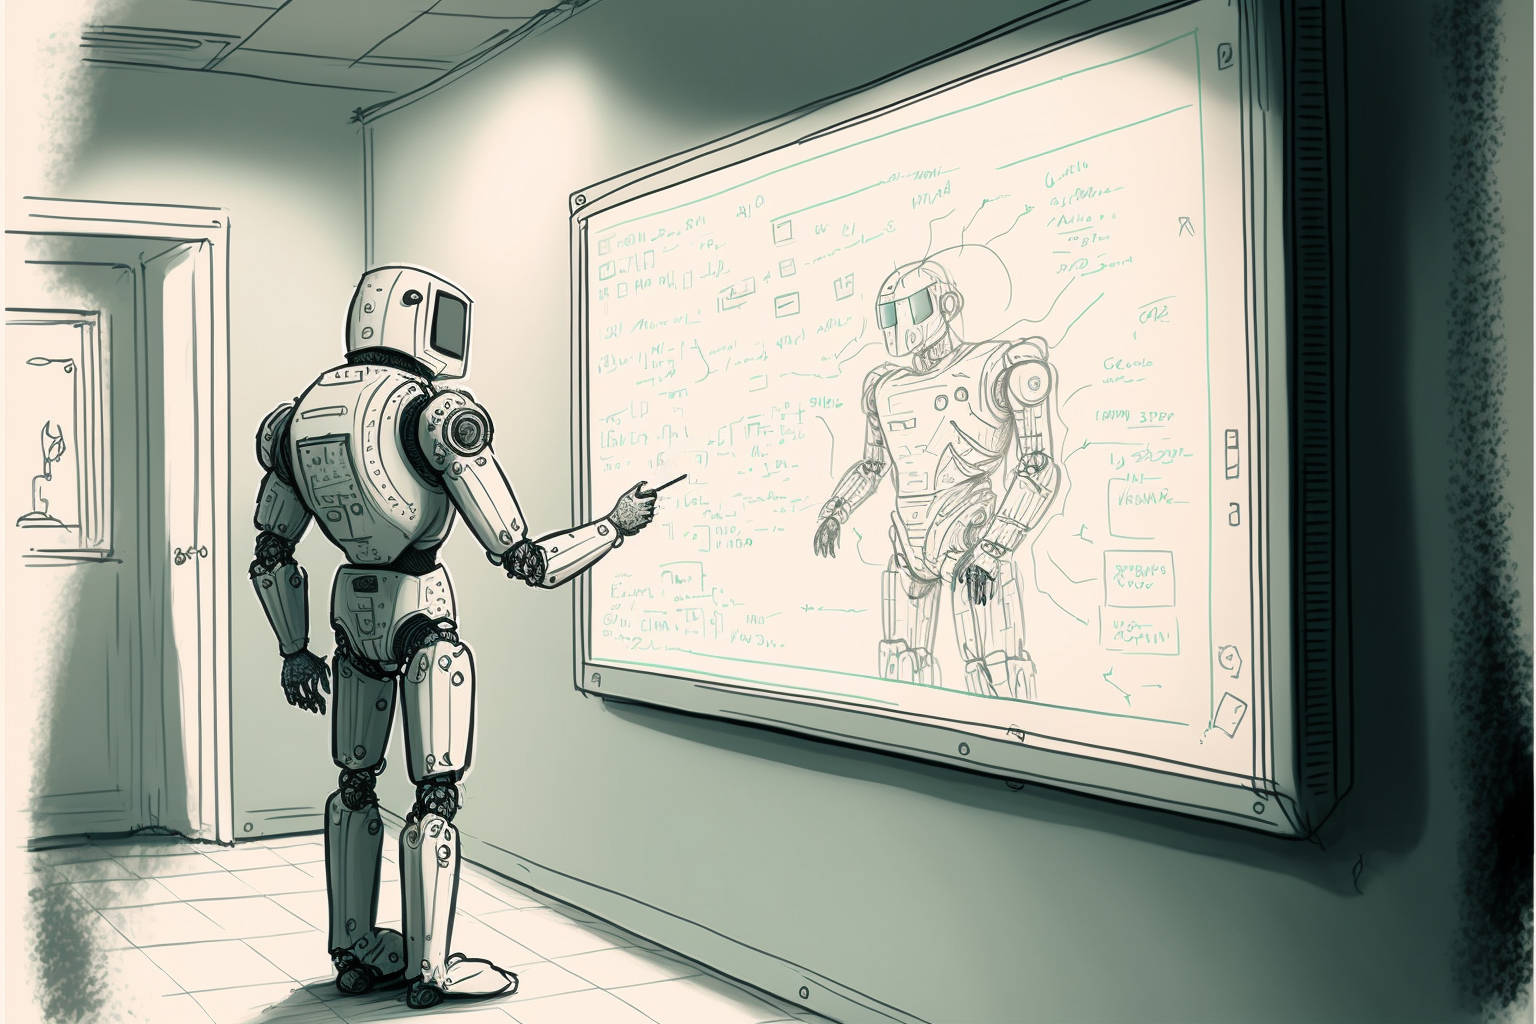 Robot Reading Whiteboard